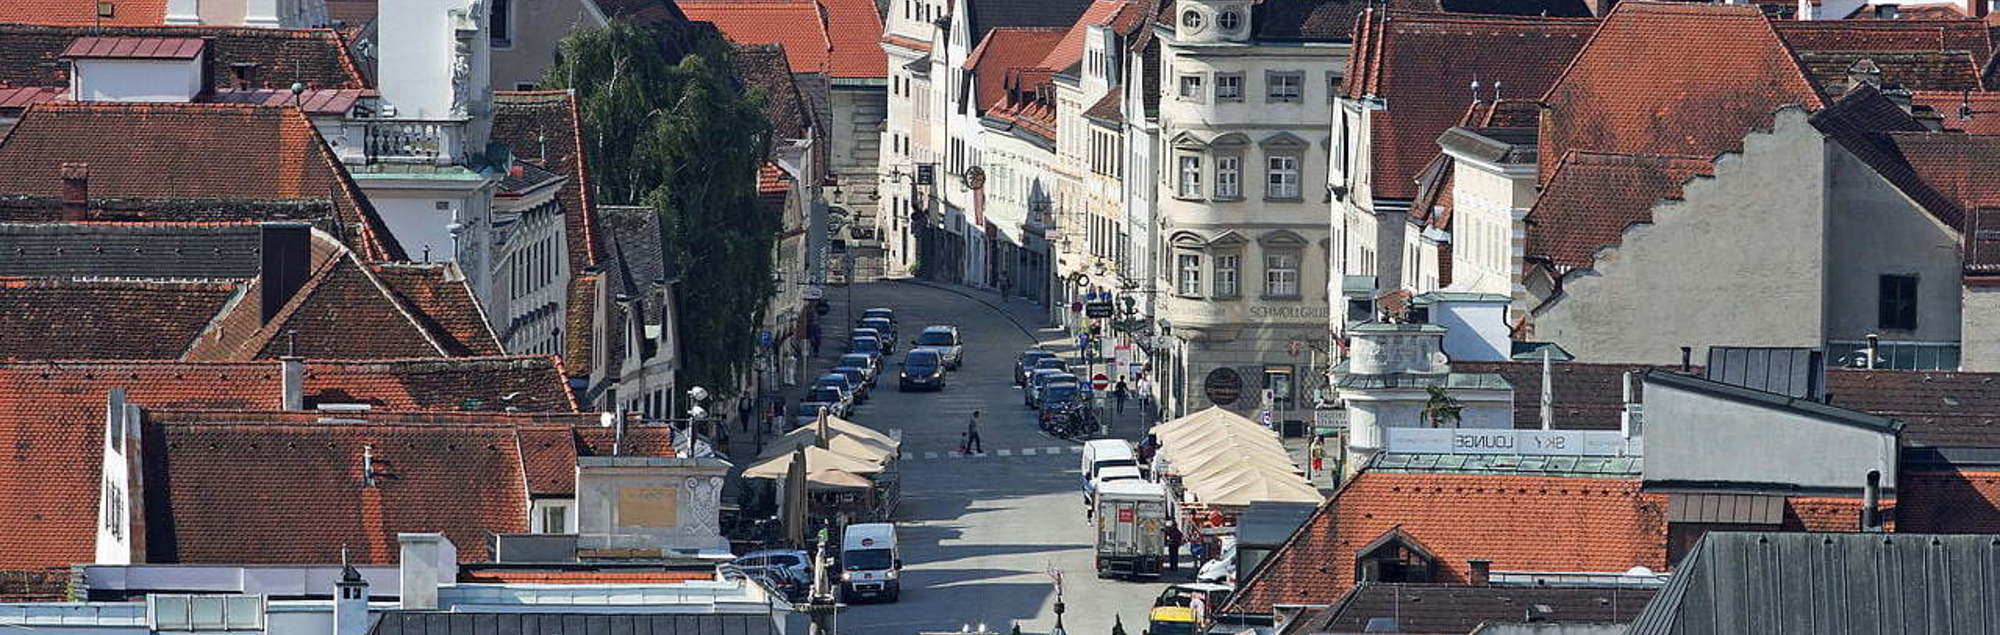 Steyr Innenstadt. © Christoph Waghubinger (Lewenstein)/wikimedia.org/CC BY-SA 3.0 AT